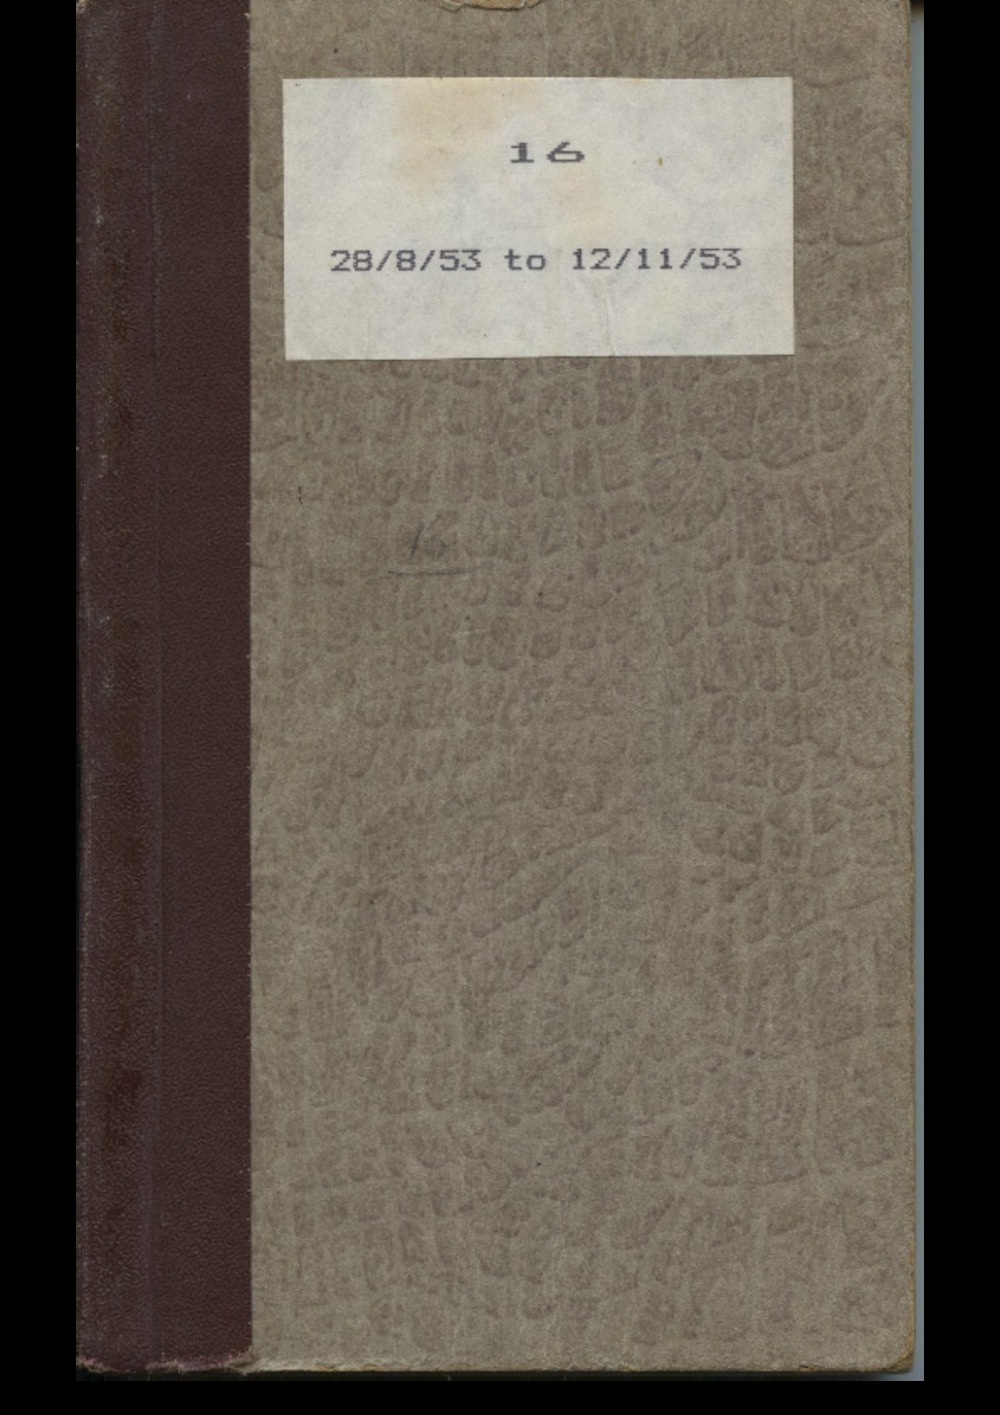 Article: Lenaerts Notebook 16 (28 Aug - 12 Nov 1953)